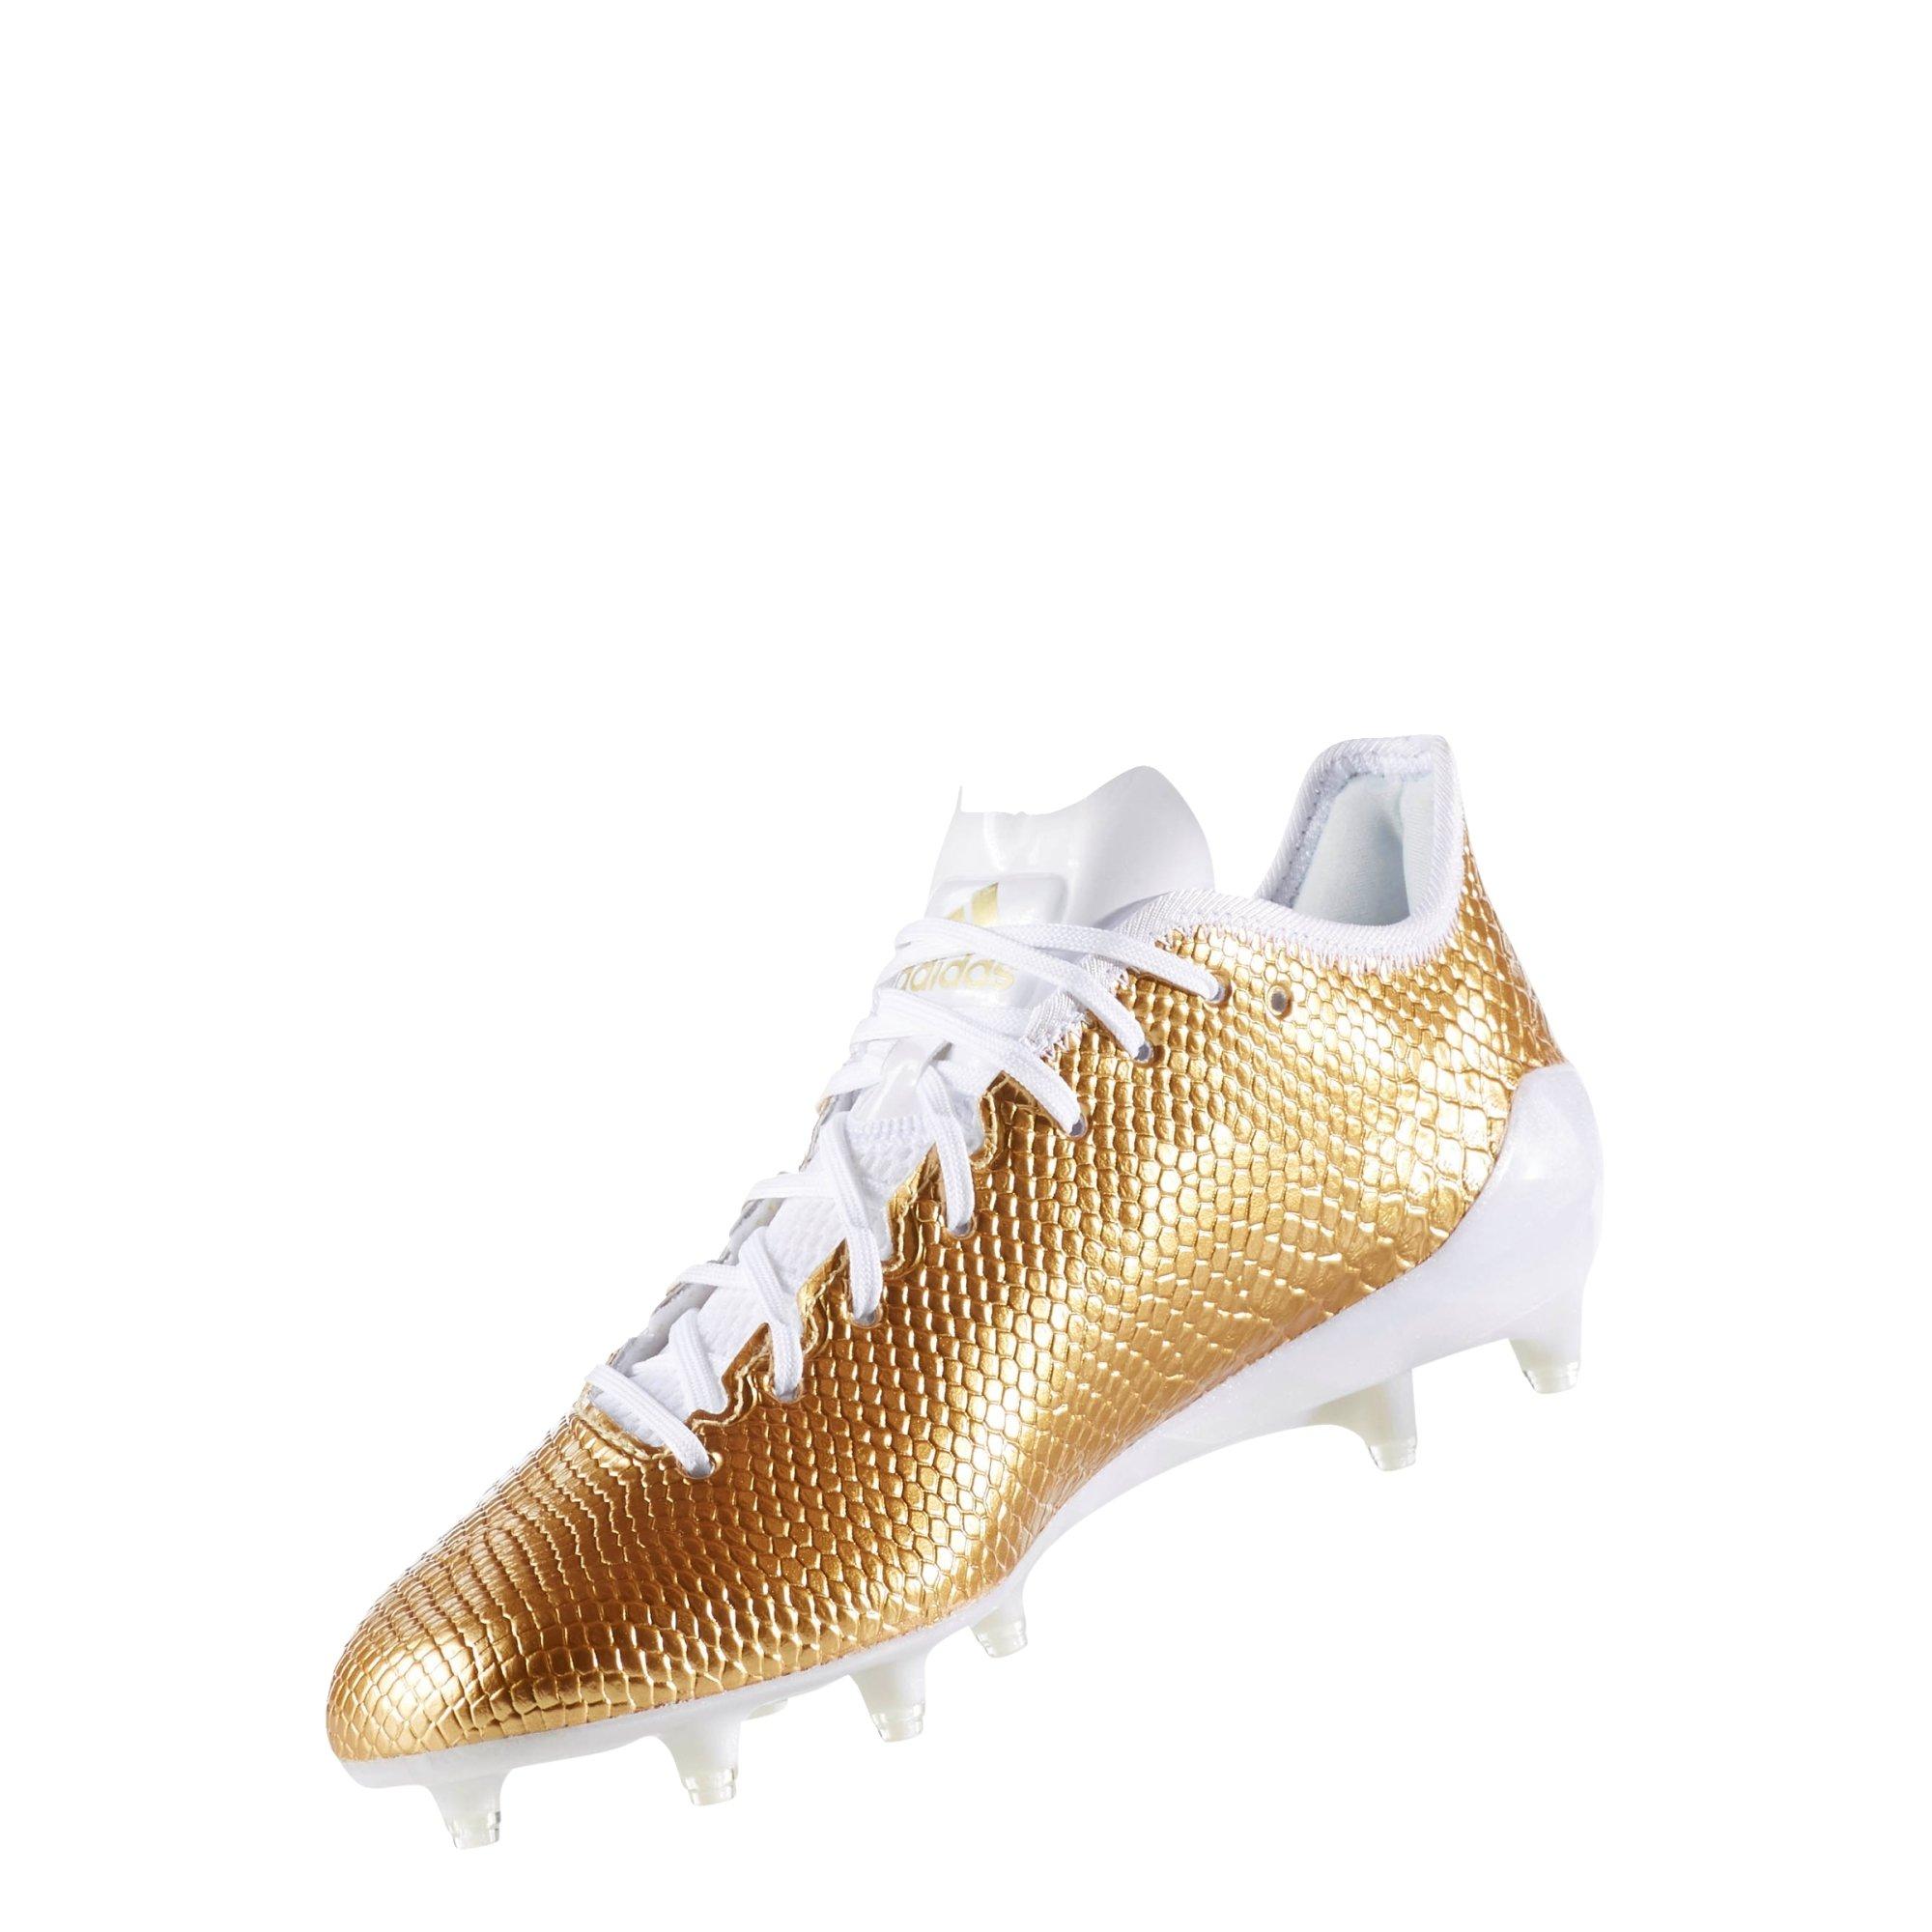 adidas adizero 5 star 6.0 gold cleat men's football